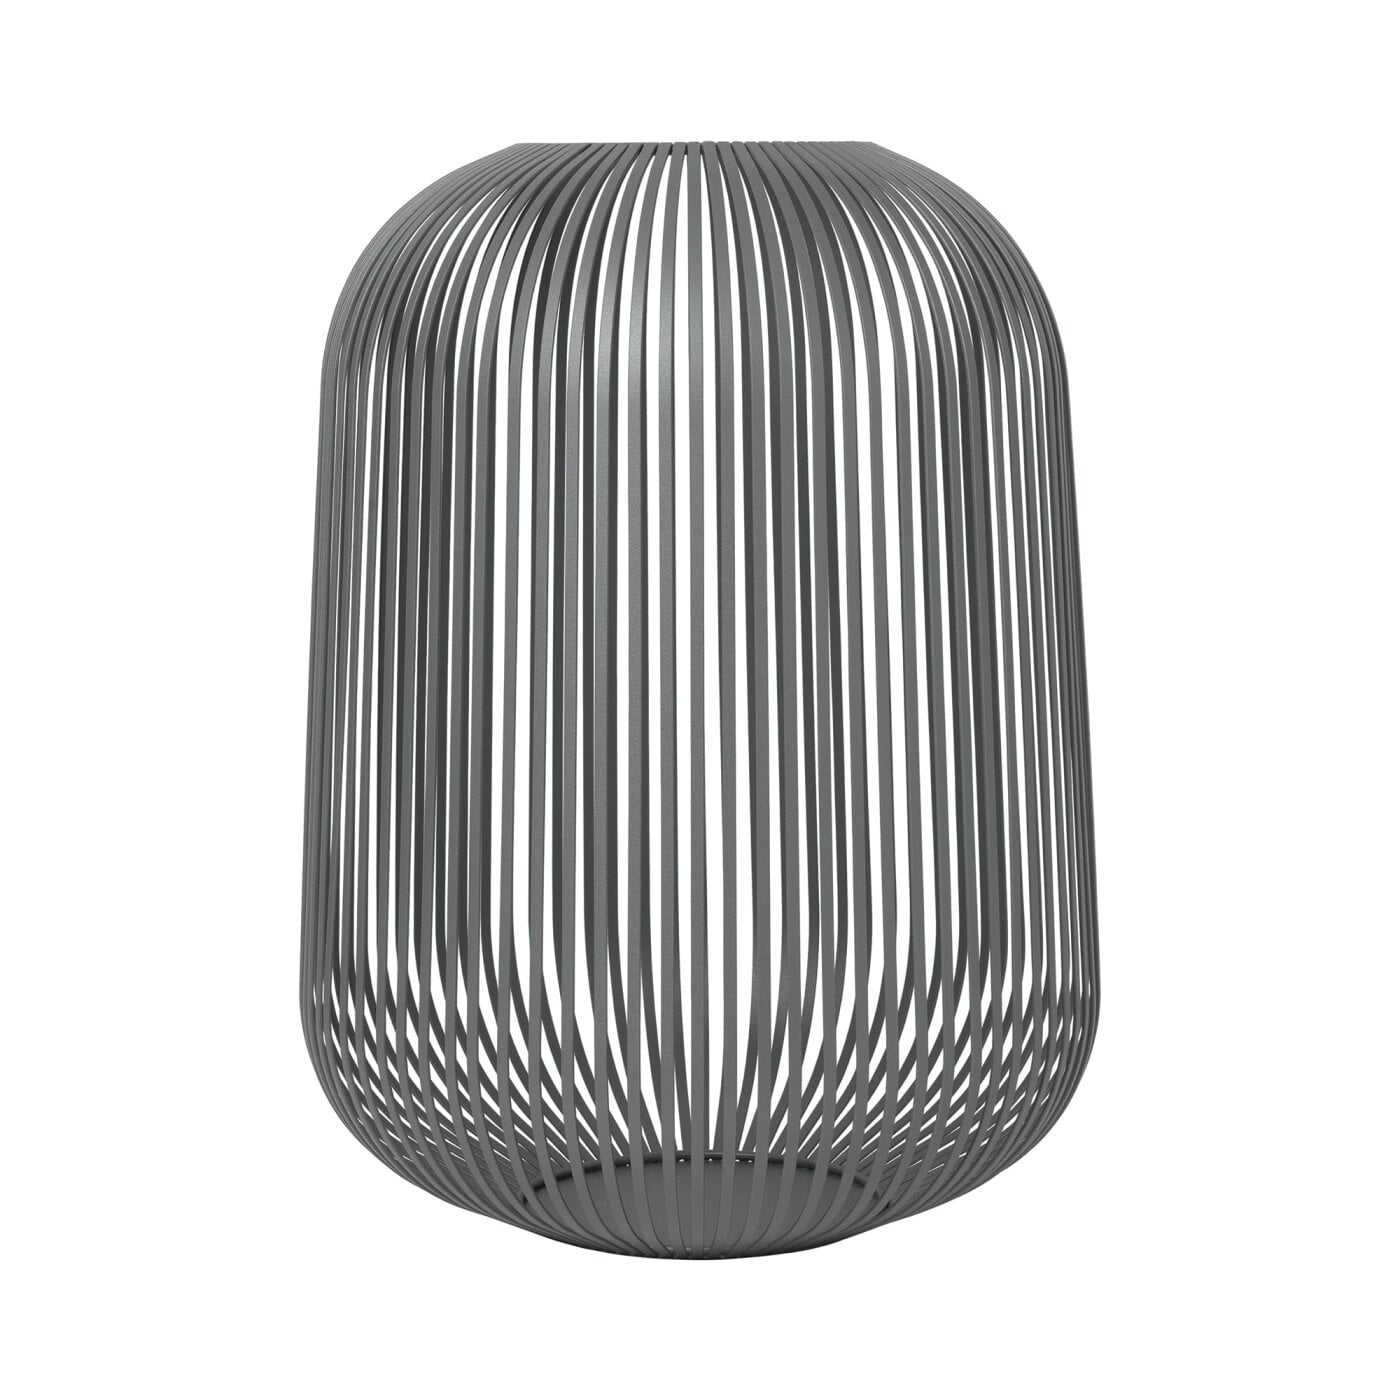 Blomus Lantern - Powder Coated Steel in Steel Grey: Large 45x33cm LITO